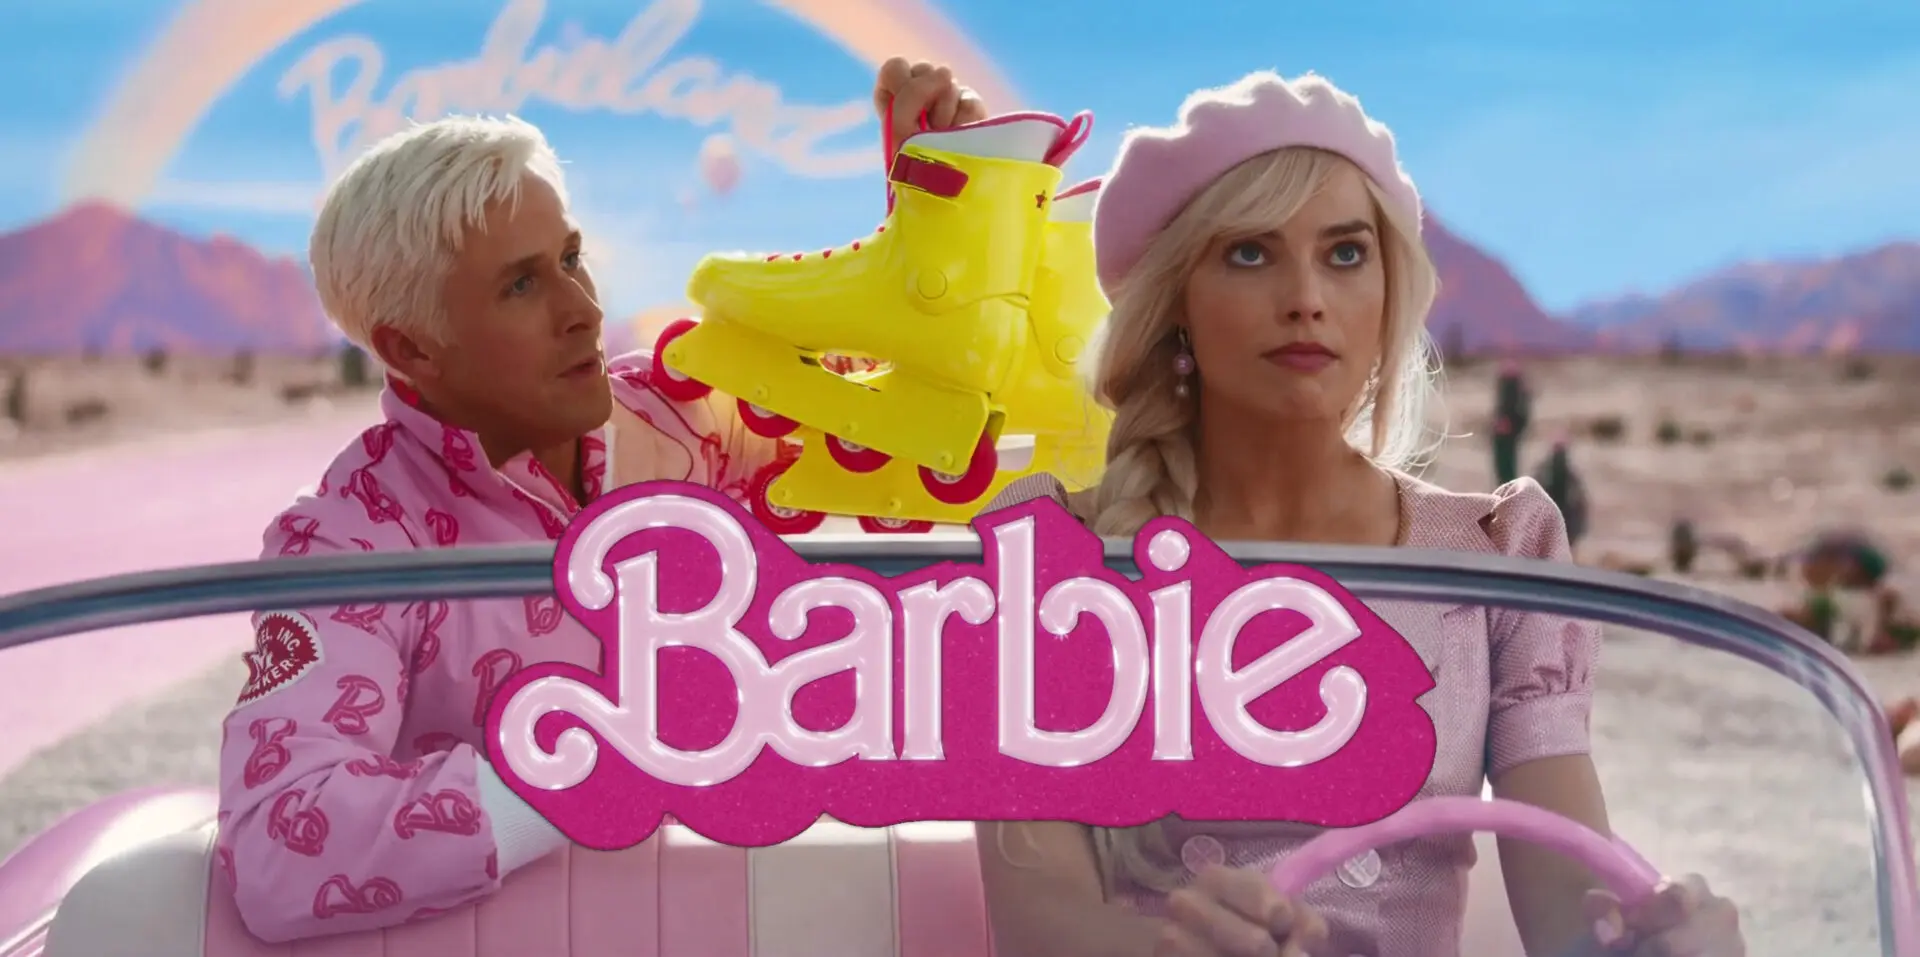 barbie teaser trailer2 banner